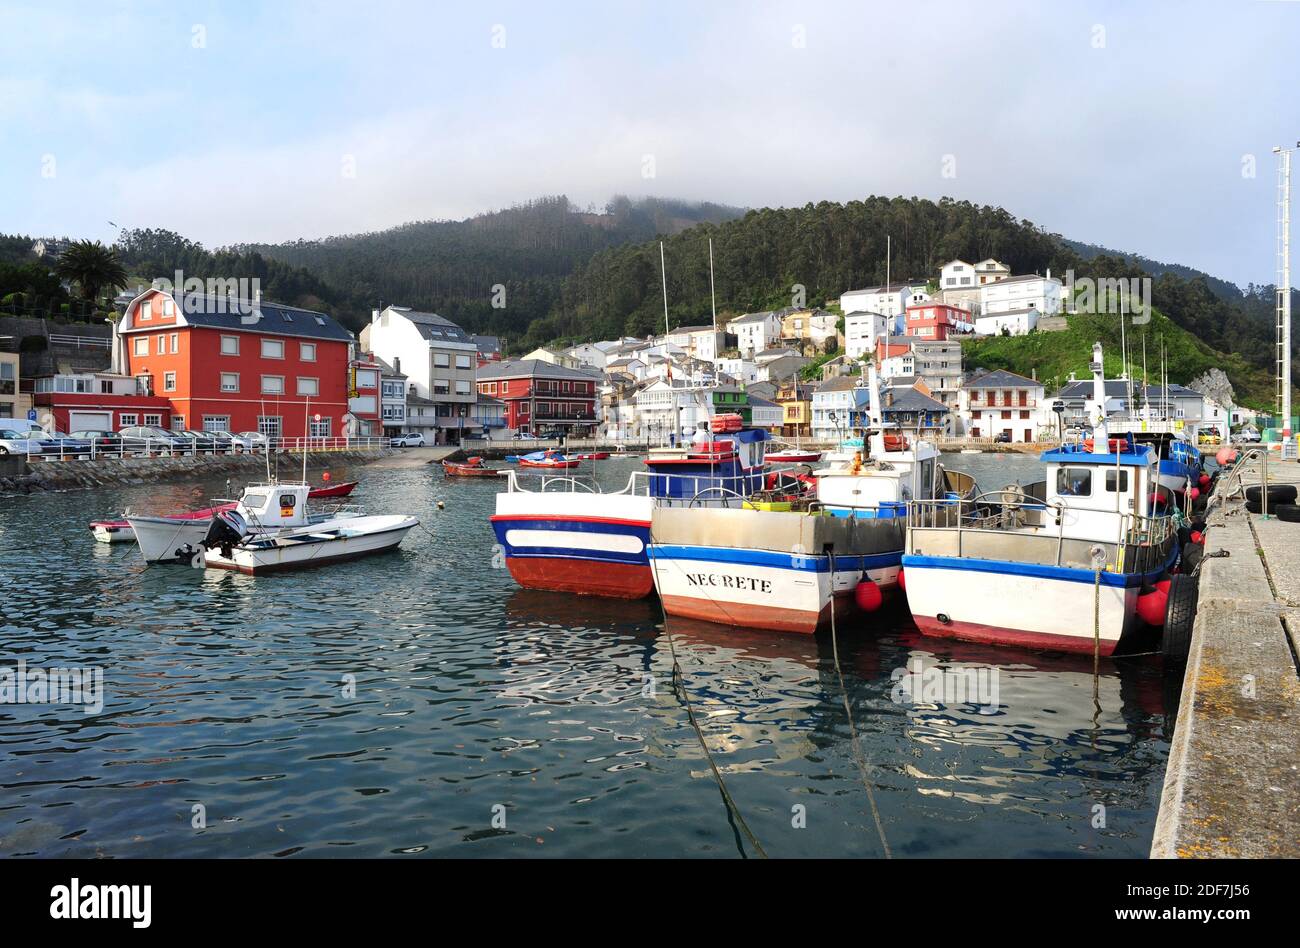 O Barqueiro, port and scenic town on high tide. Mañon municipality, A Coruña province, Galicia, Spain. Stock Photo